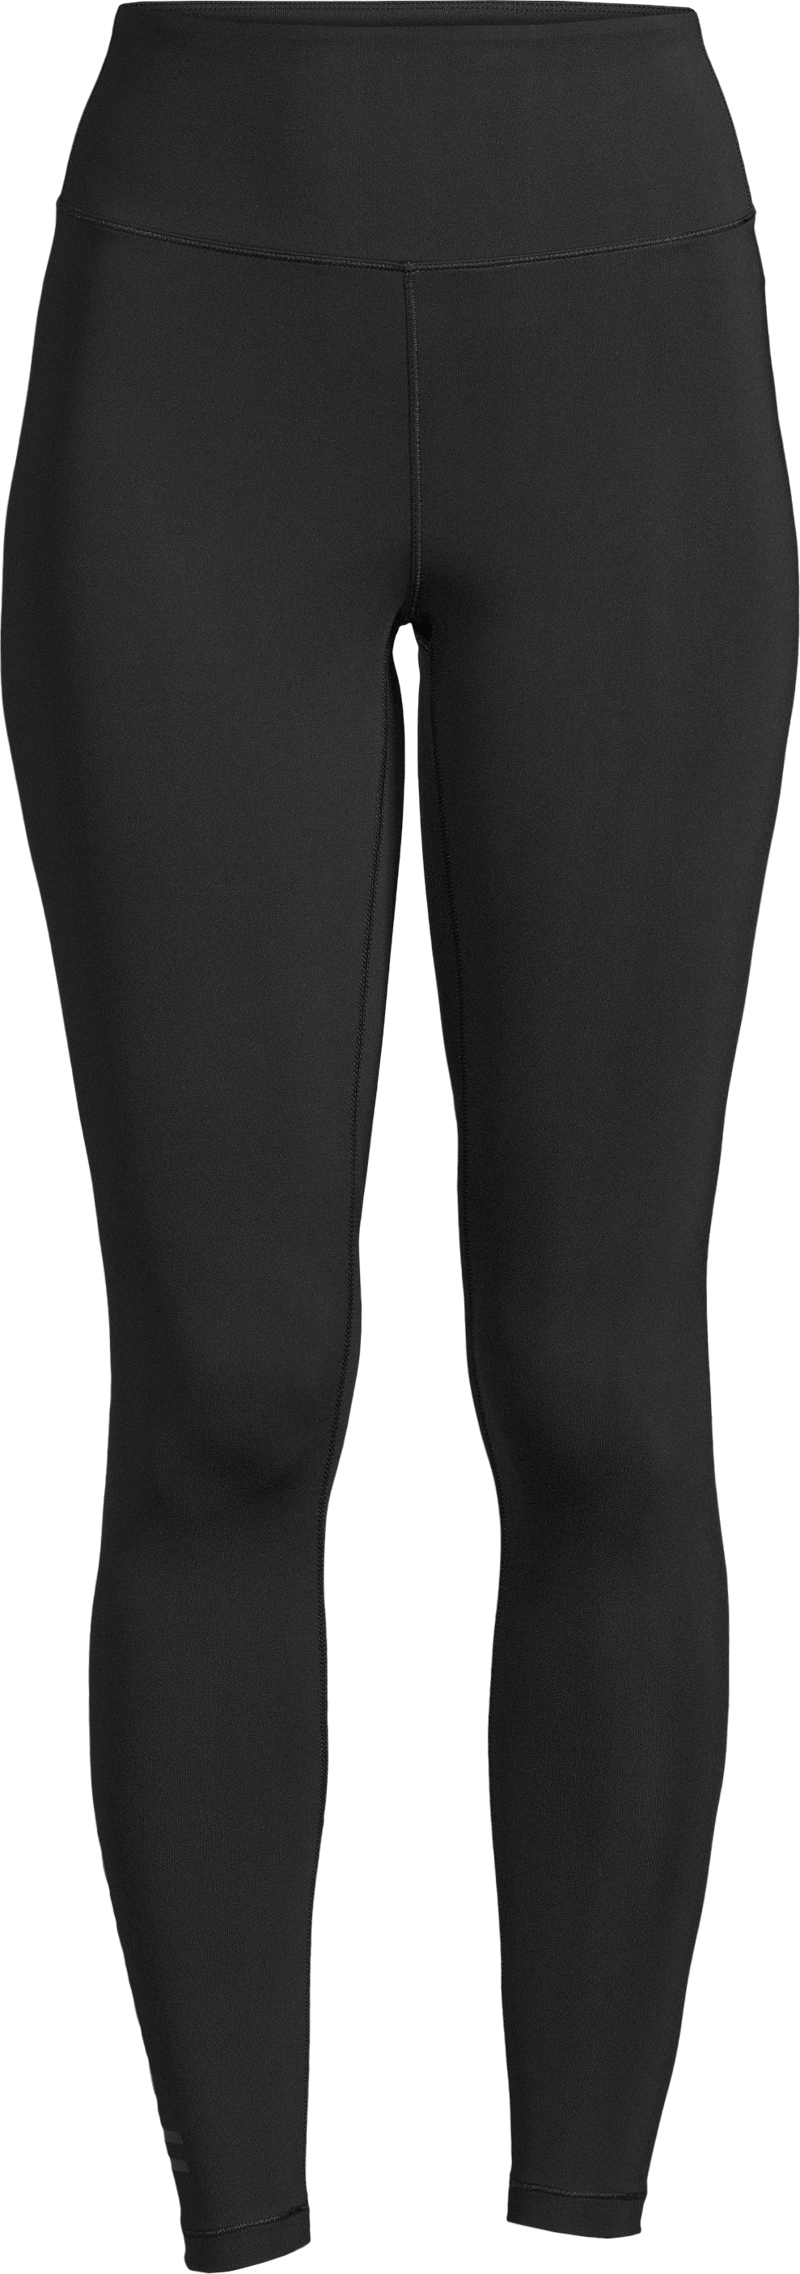 https://www.fjellsport.no/assets/blobs/casall-women-s-graphic-sport-tights-black-0d64cbb99a.png?w=800